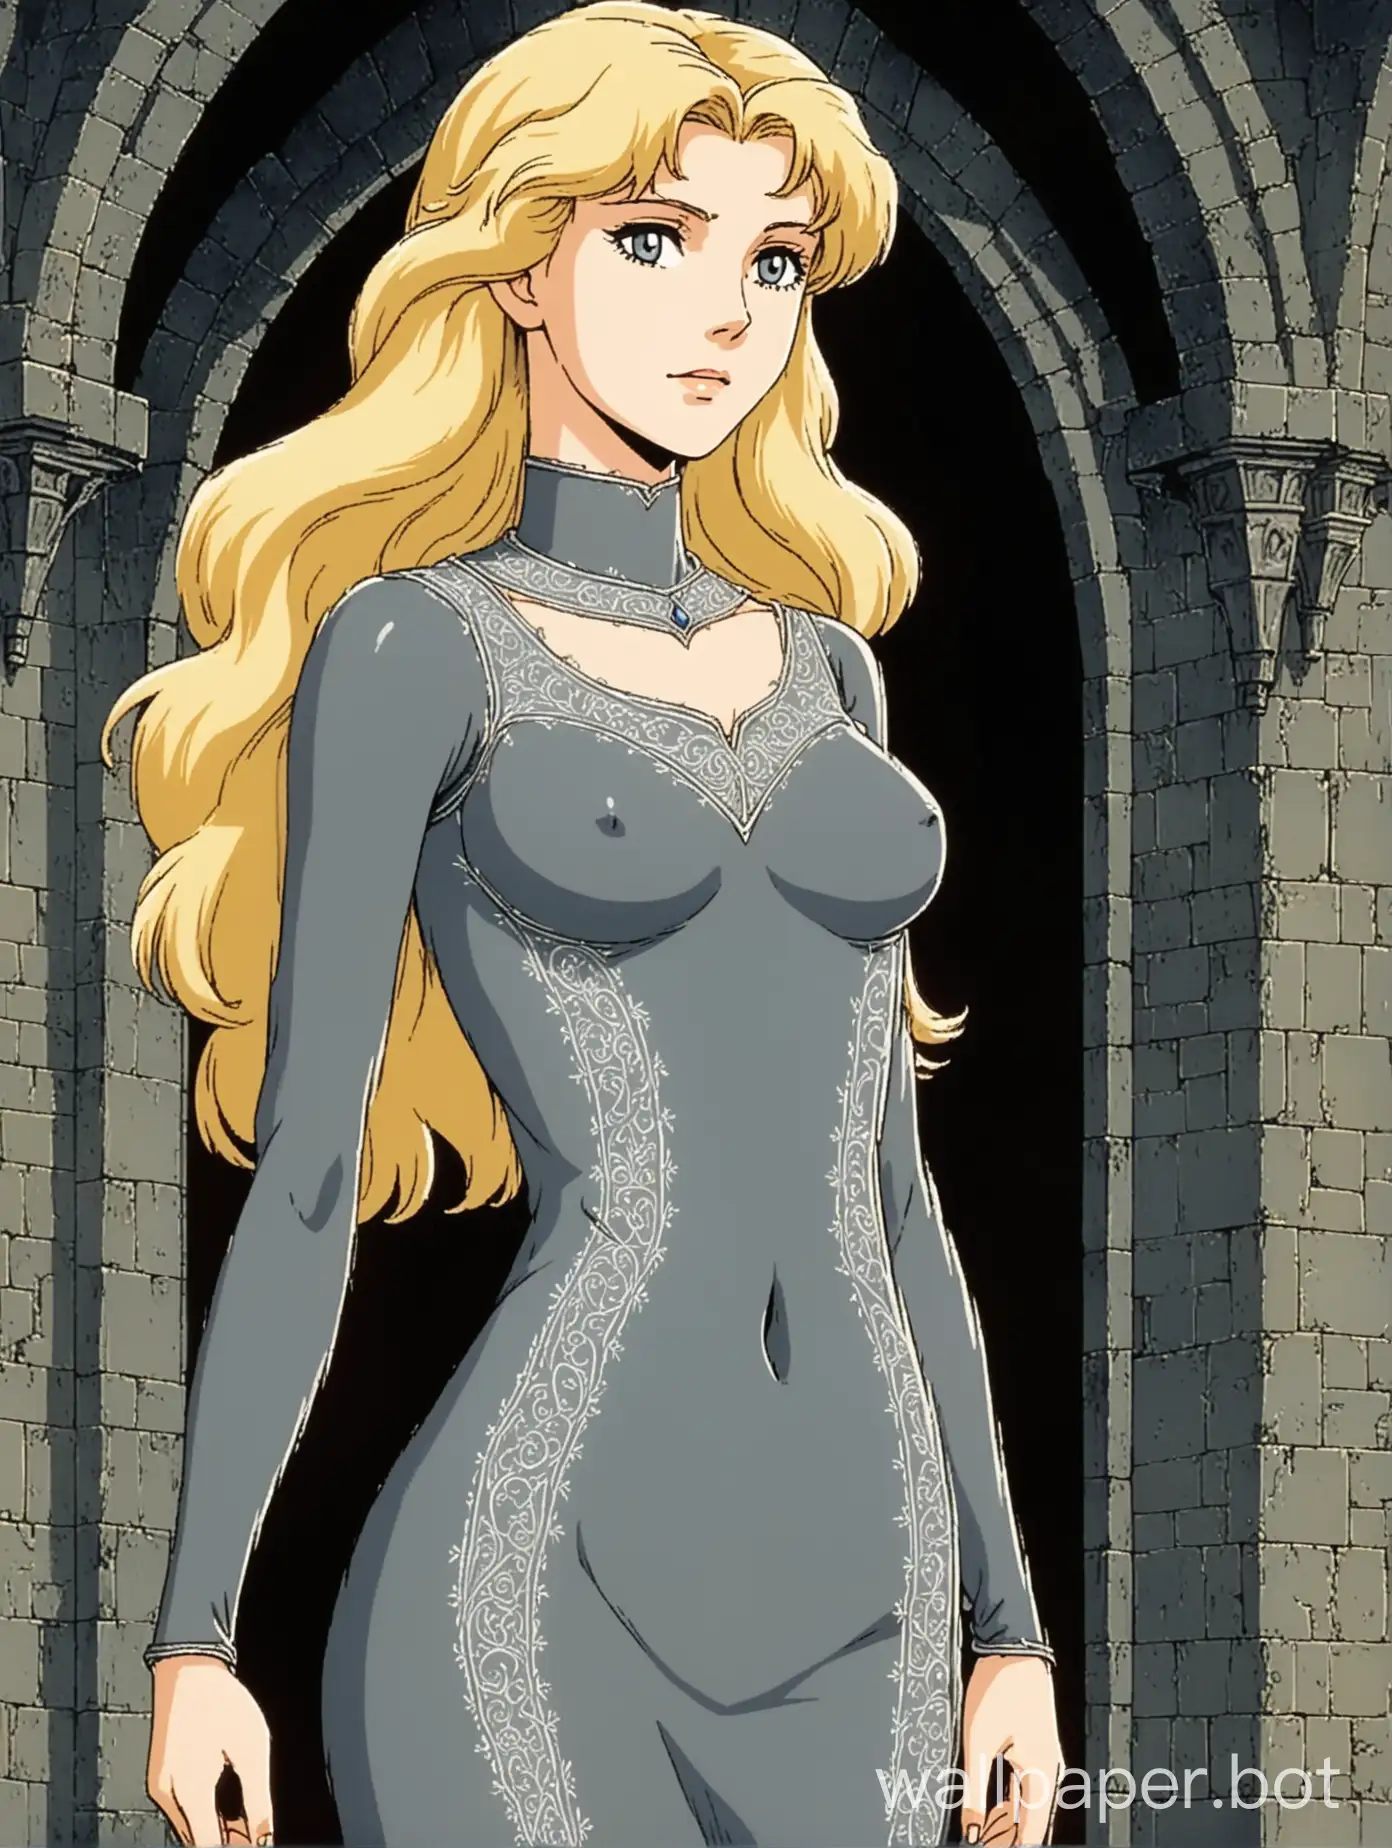 Elegant-WhiteHaired-Woman-in-Medieval-Castle-Interior-Retro-Anime-Inspired-Art